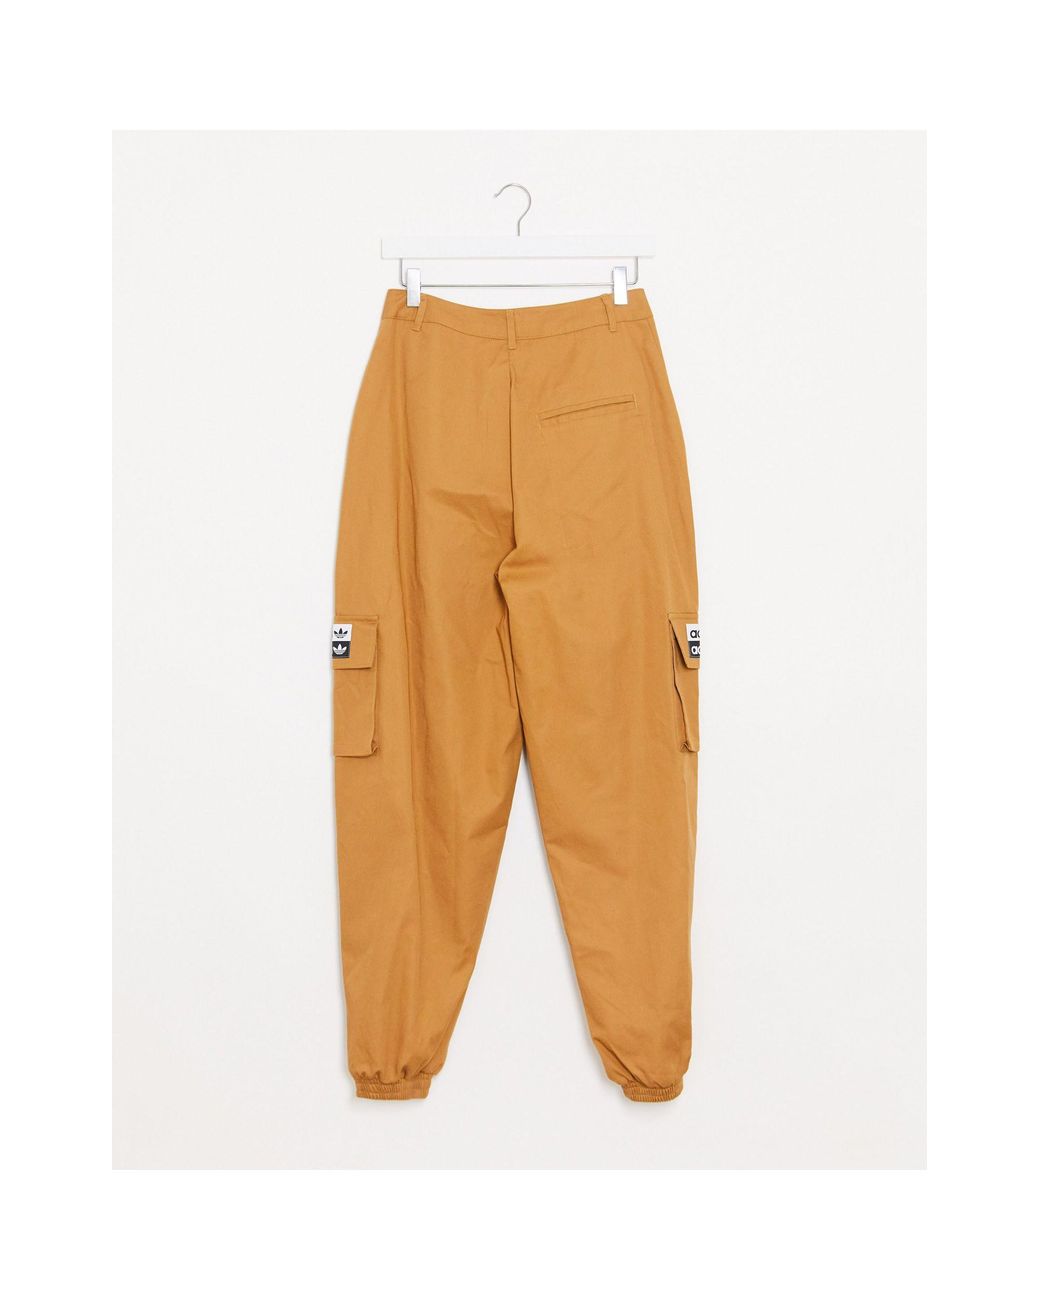 adidas Originals Ryv Cargo Pants in Brown | Lyst